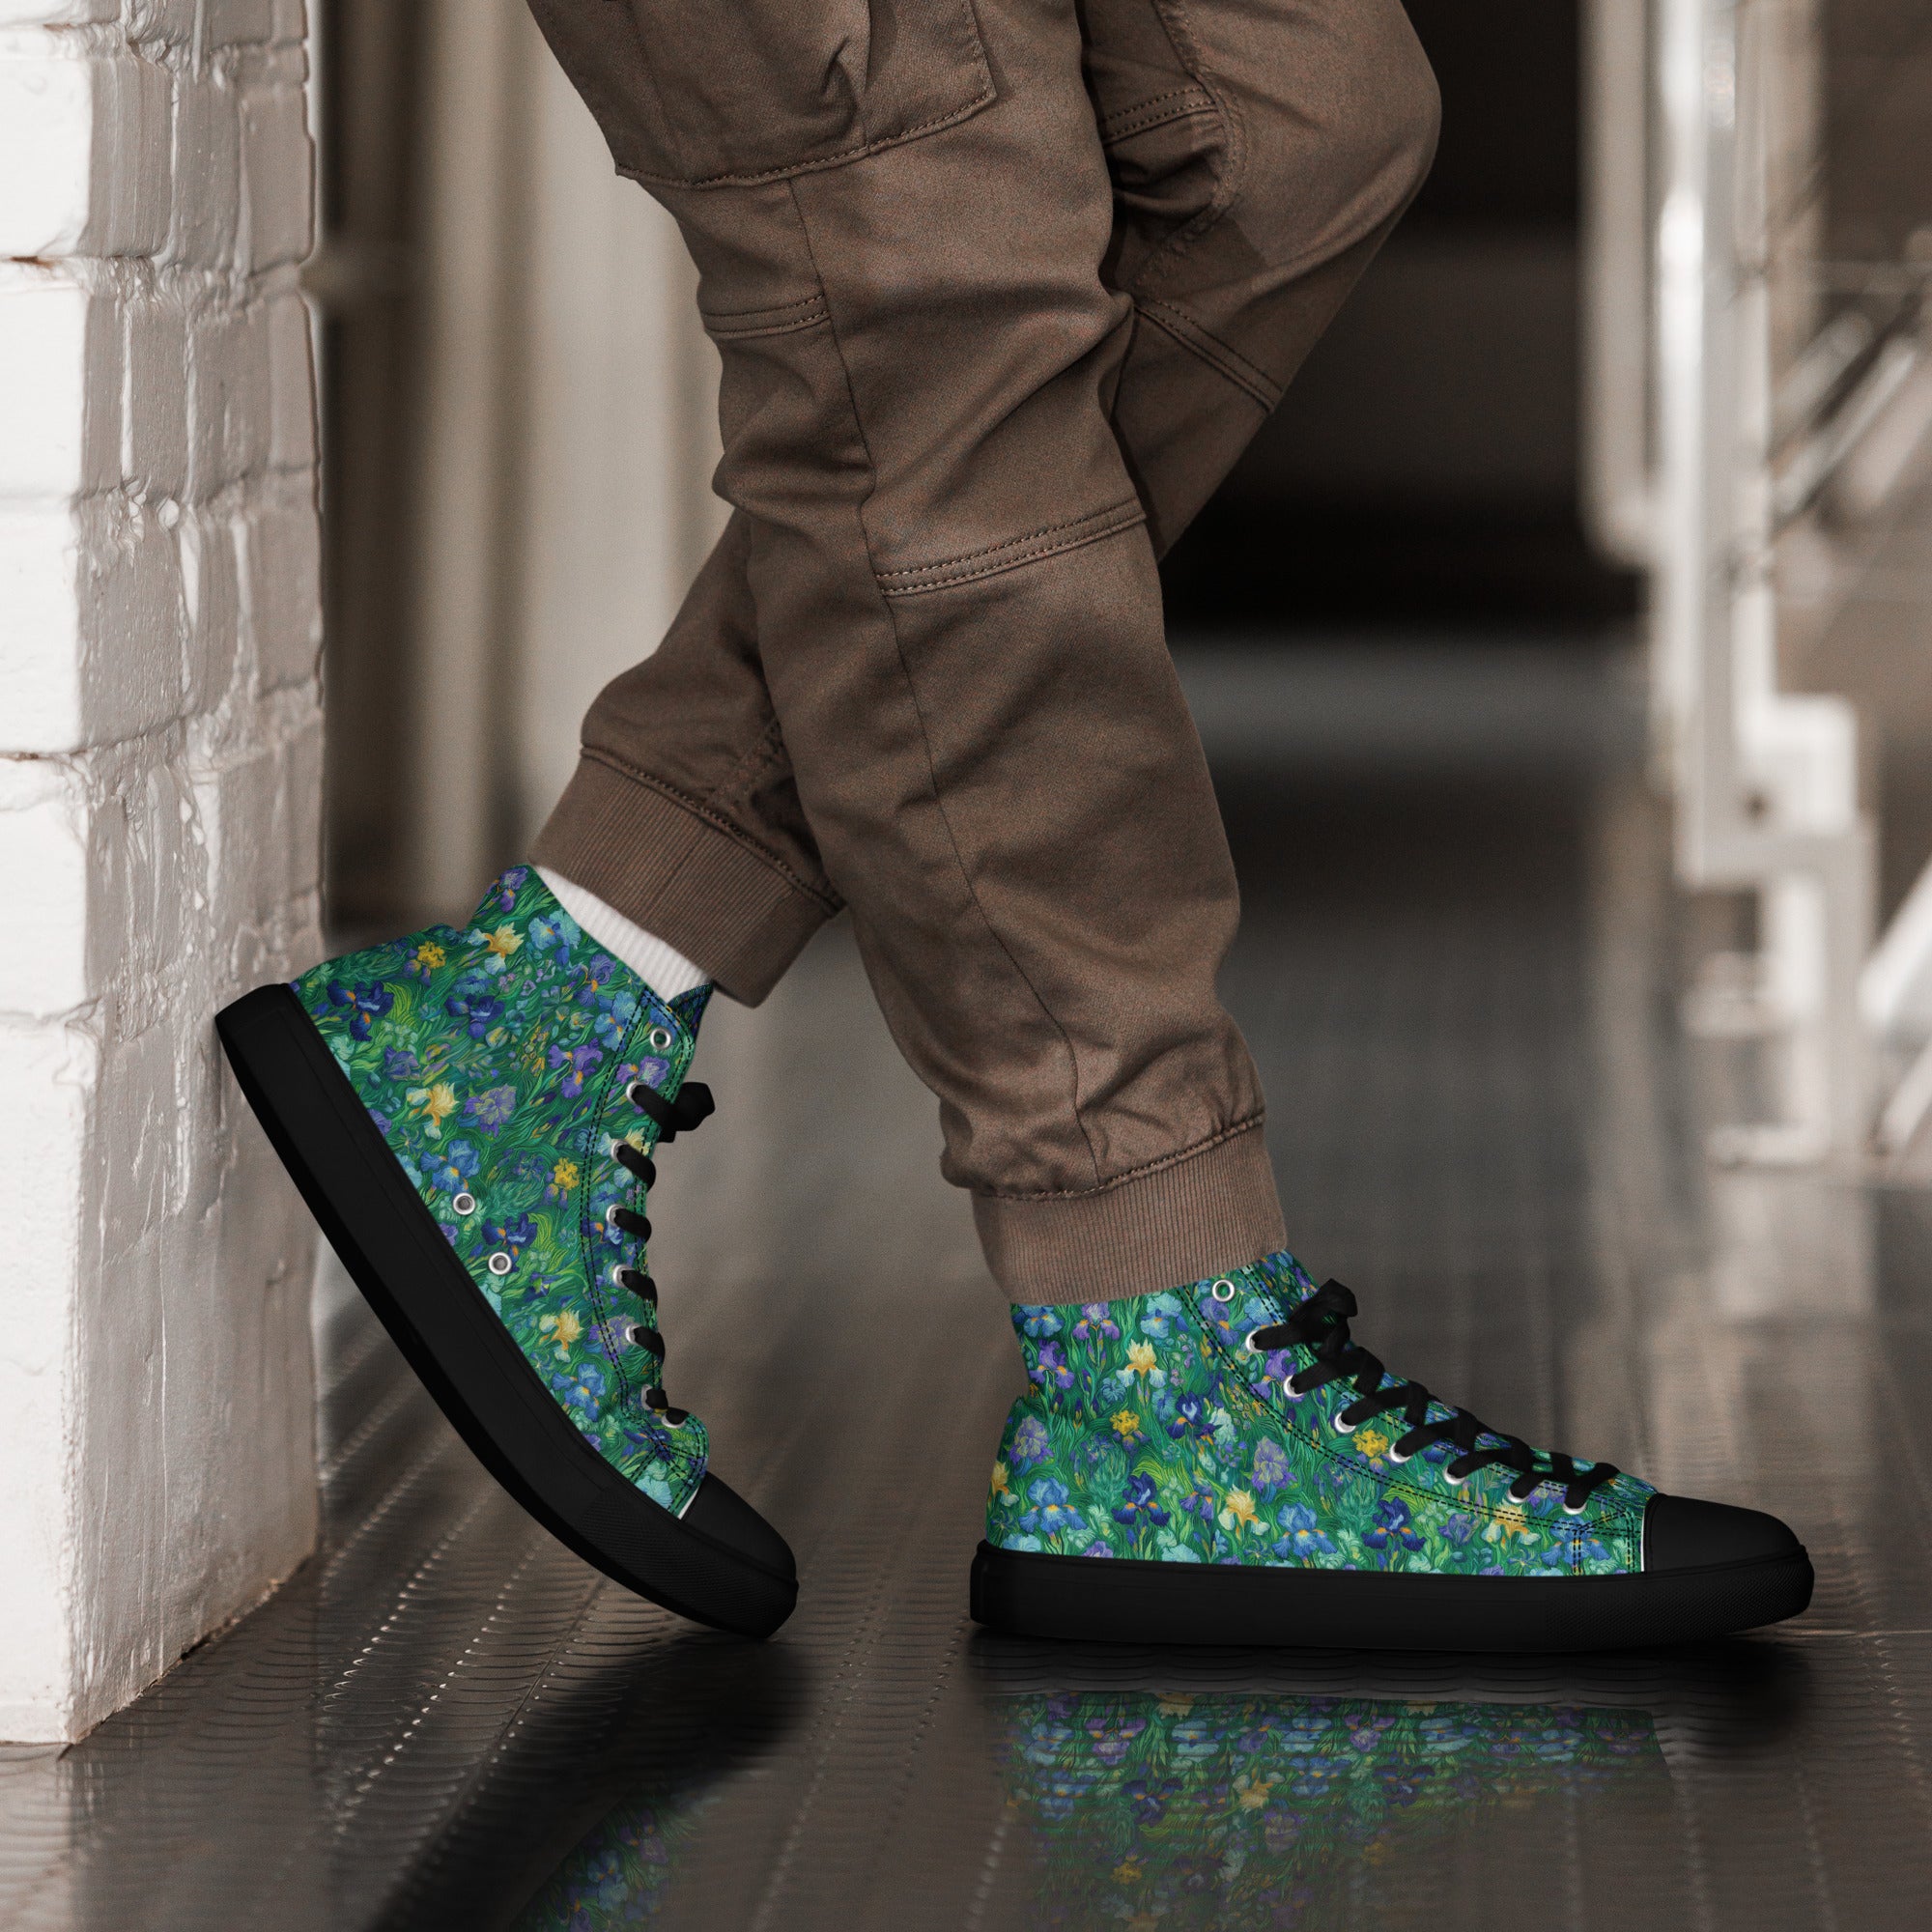 Vincent van Gogh 'Irises' High Top Shoes | Premium Art High Top Sneakers for Men